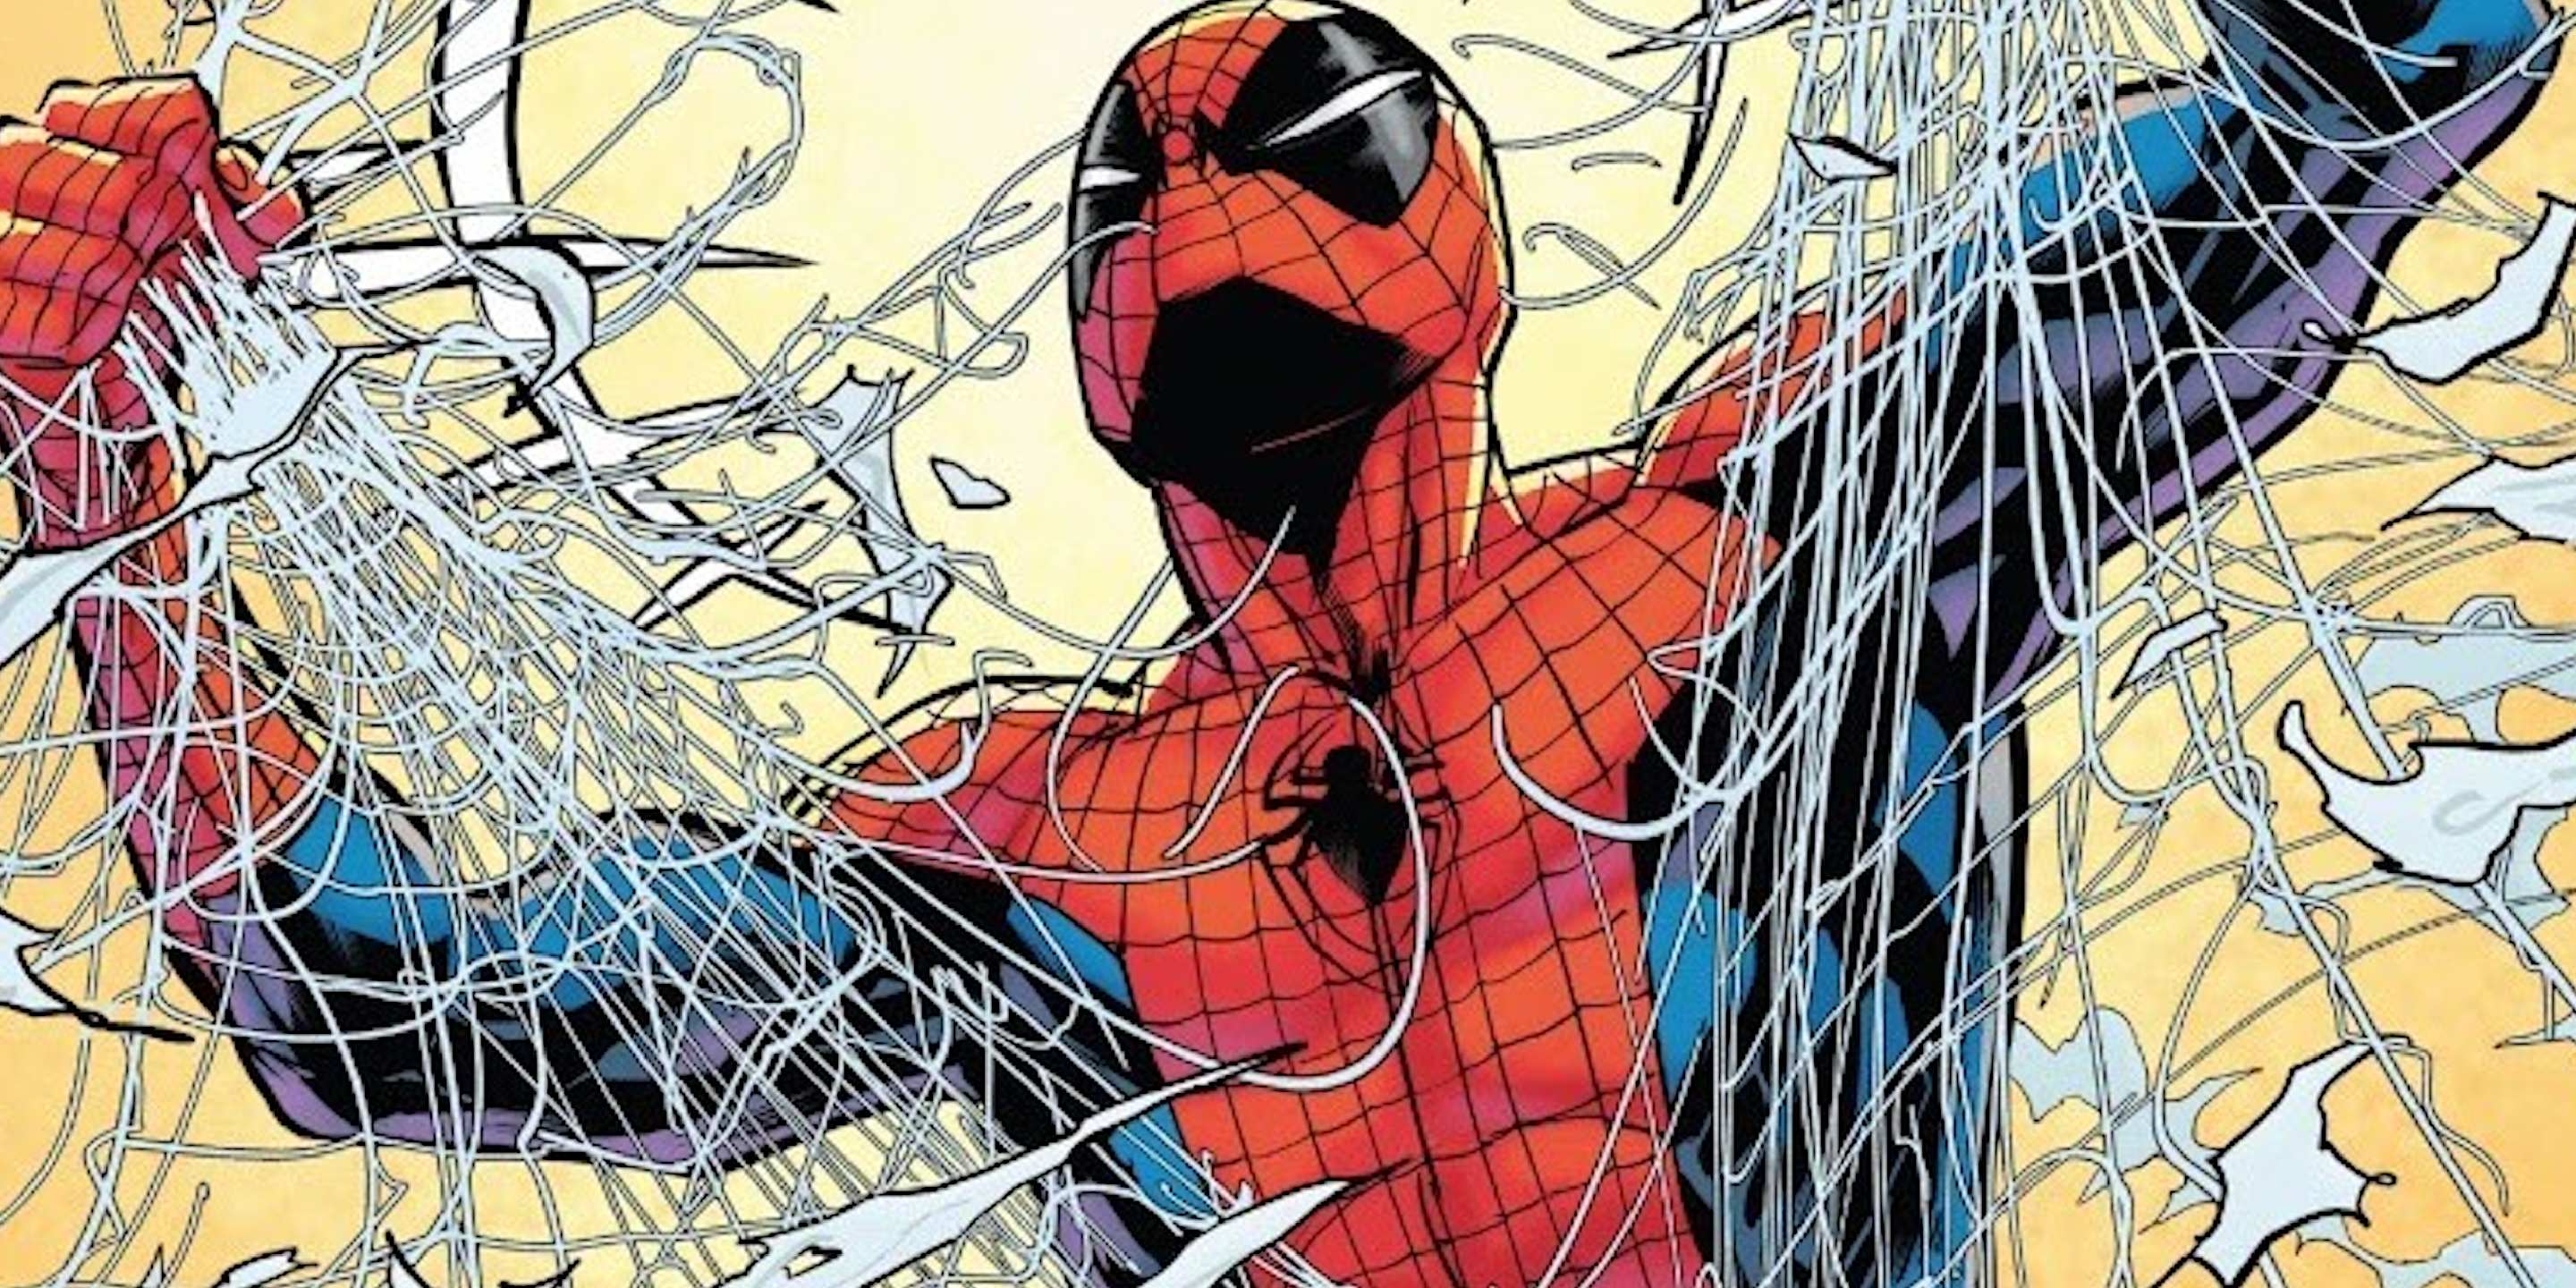 Spider-Man breaks through a web